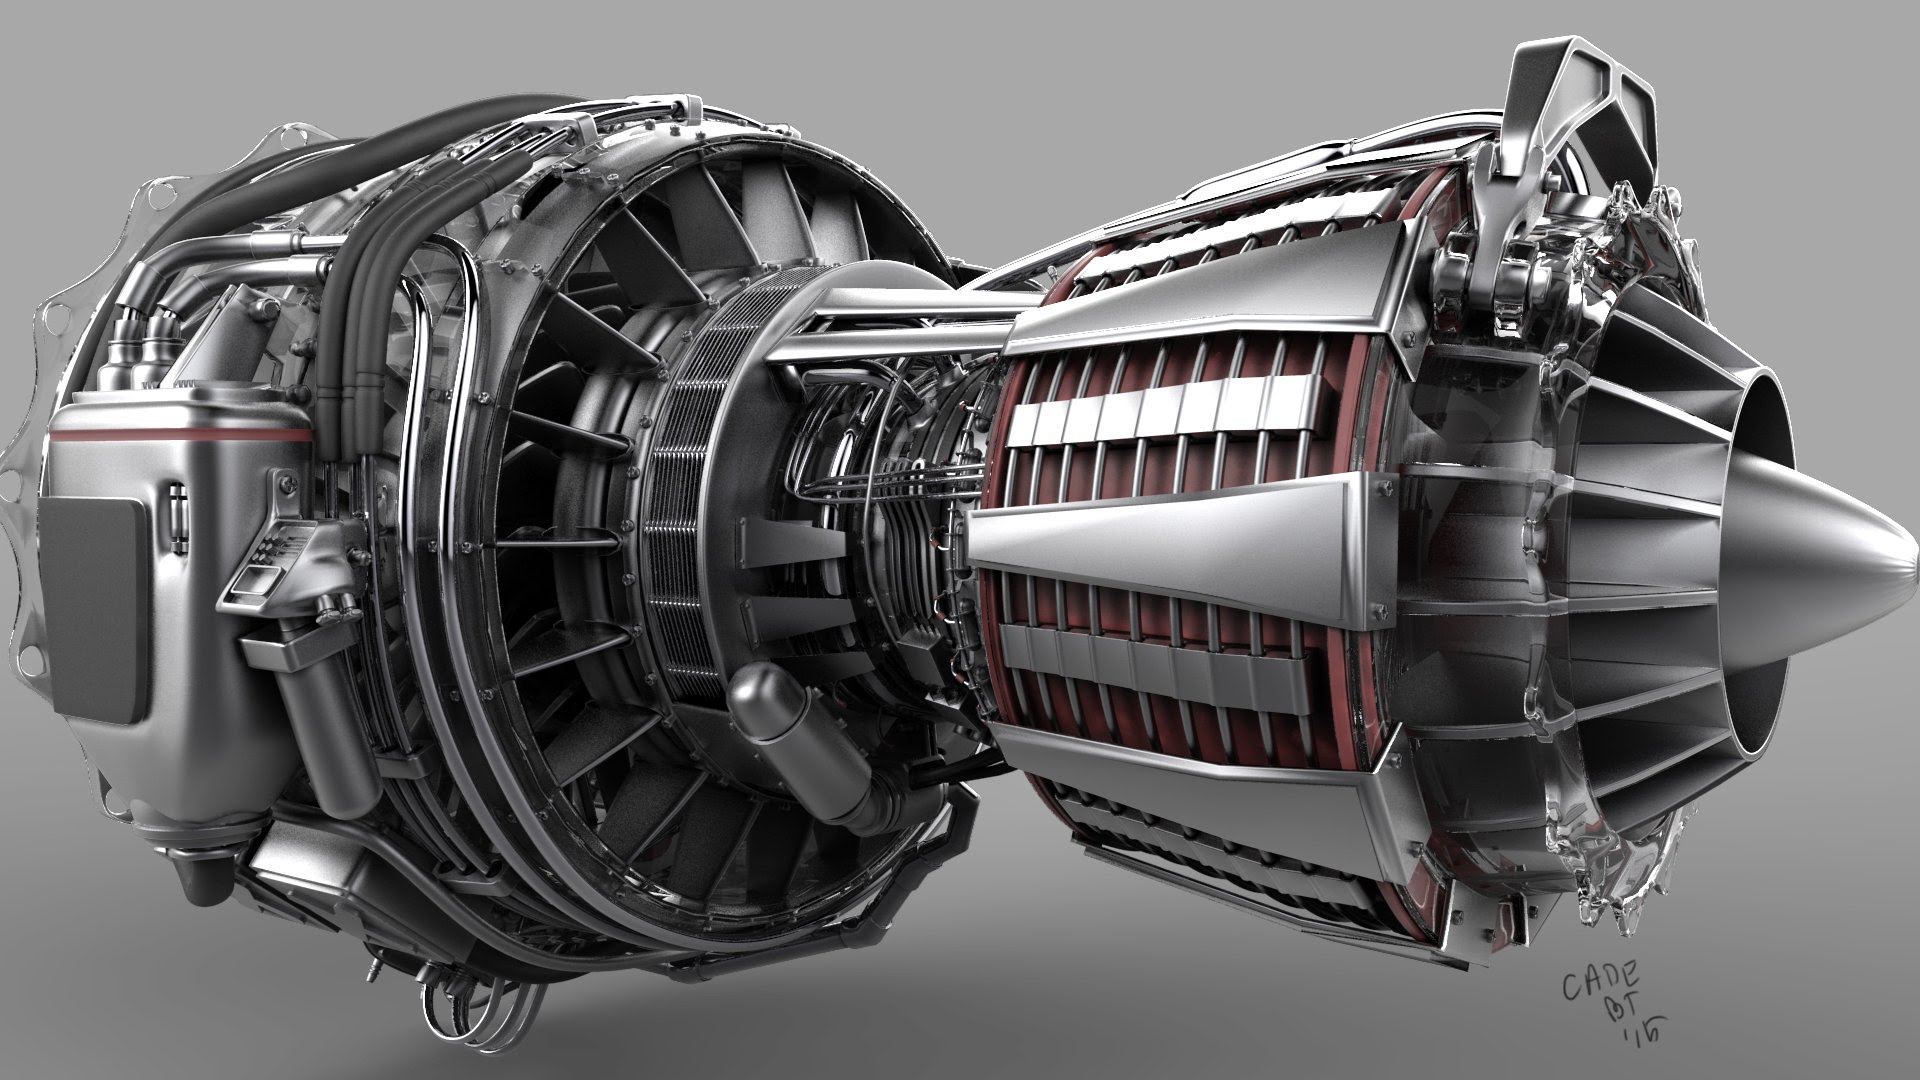 Jet Engine Photo - Turbo Fan Engine , HD Wallpaper & Backgrounds